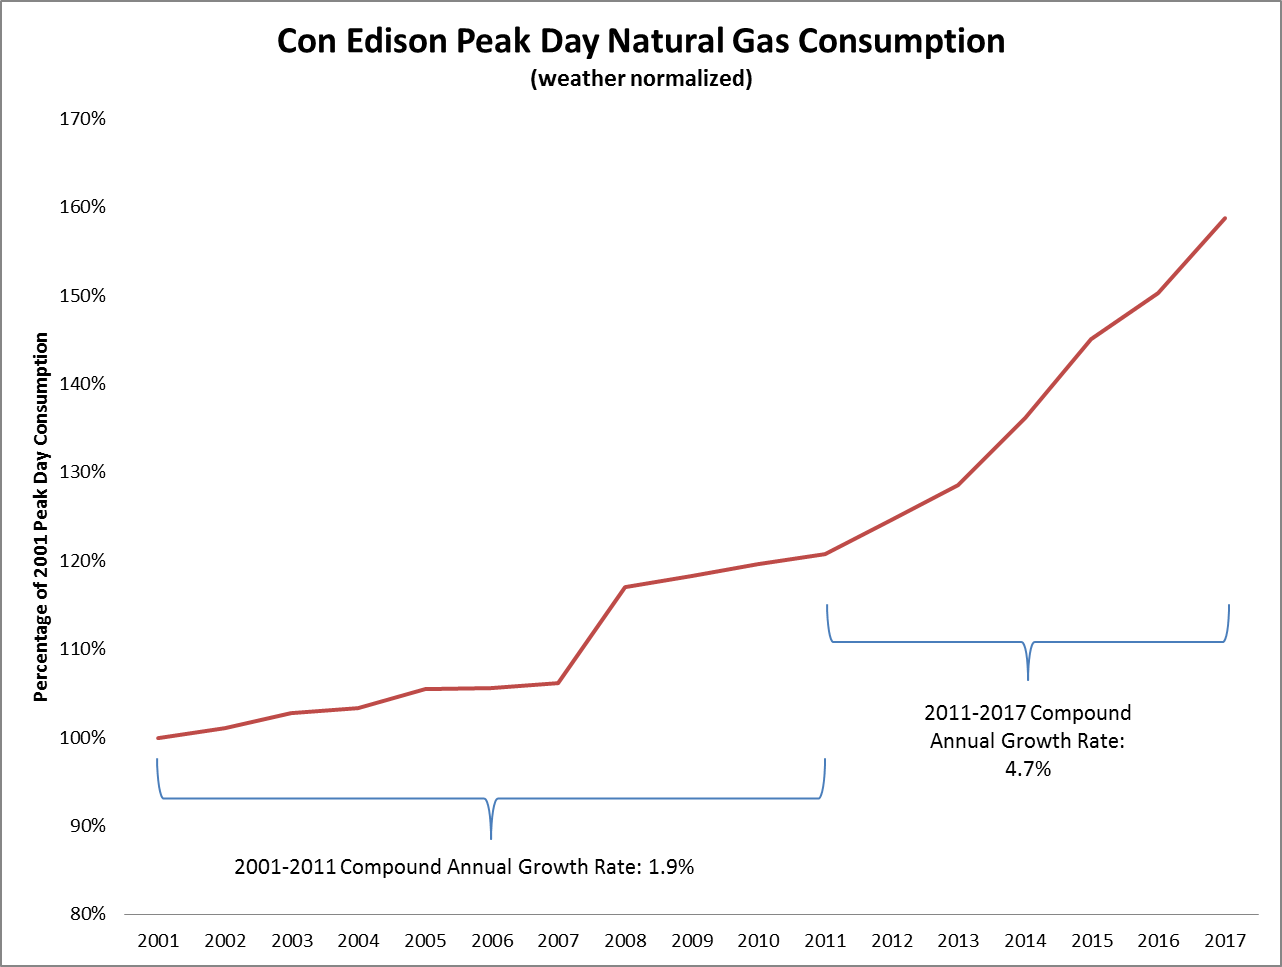 Con Edison Peak Day Natural Gas Consumption